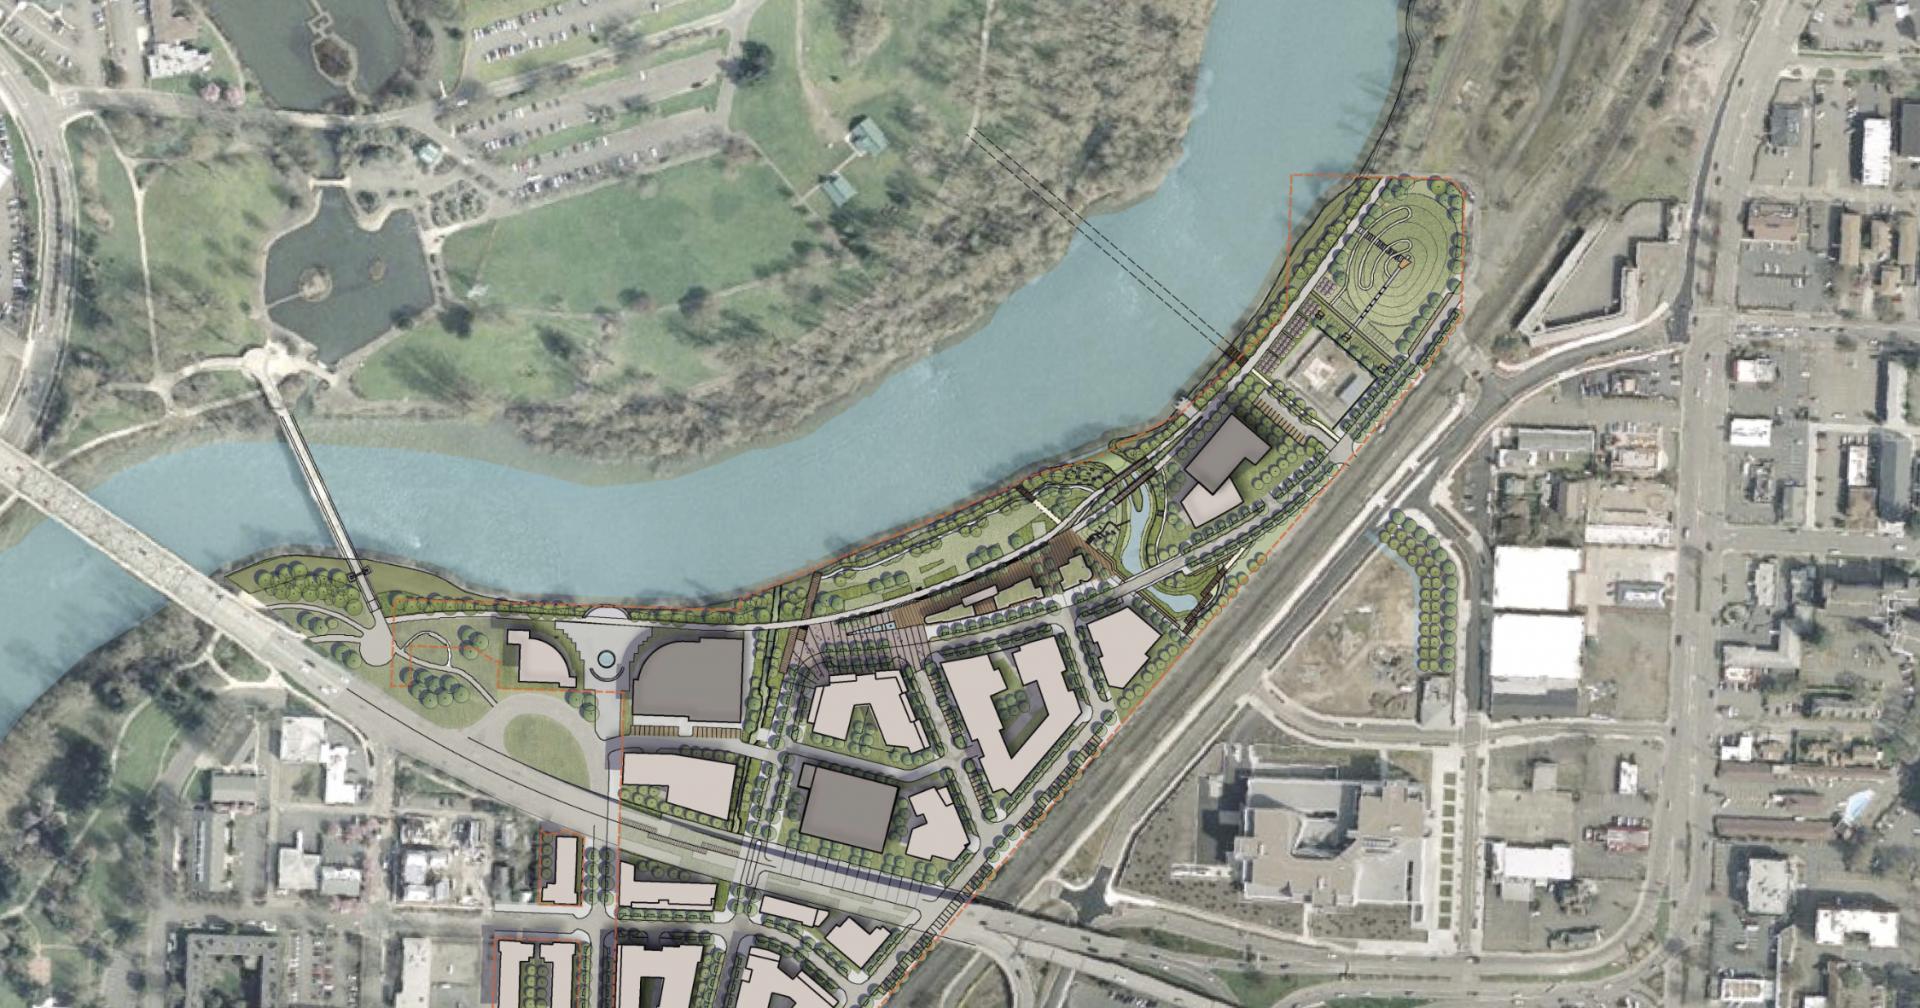 Eugene's Williamette Waterfront Master Plan